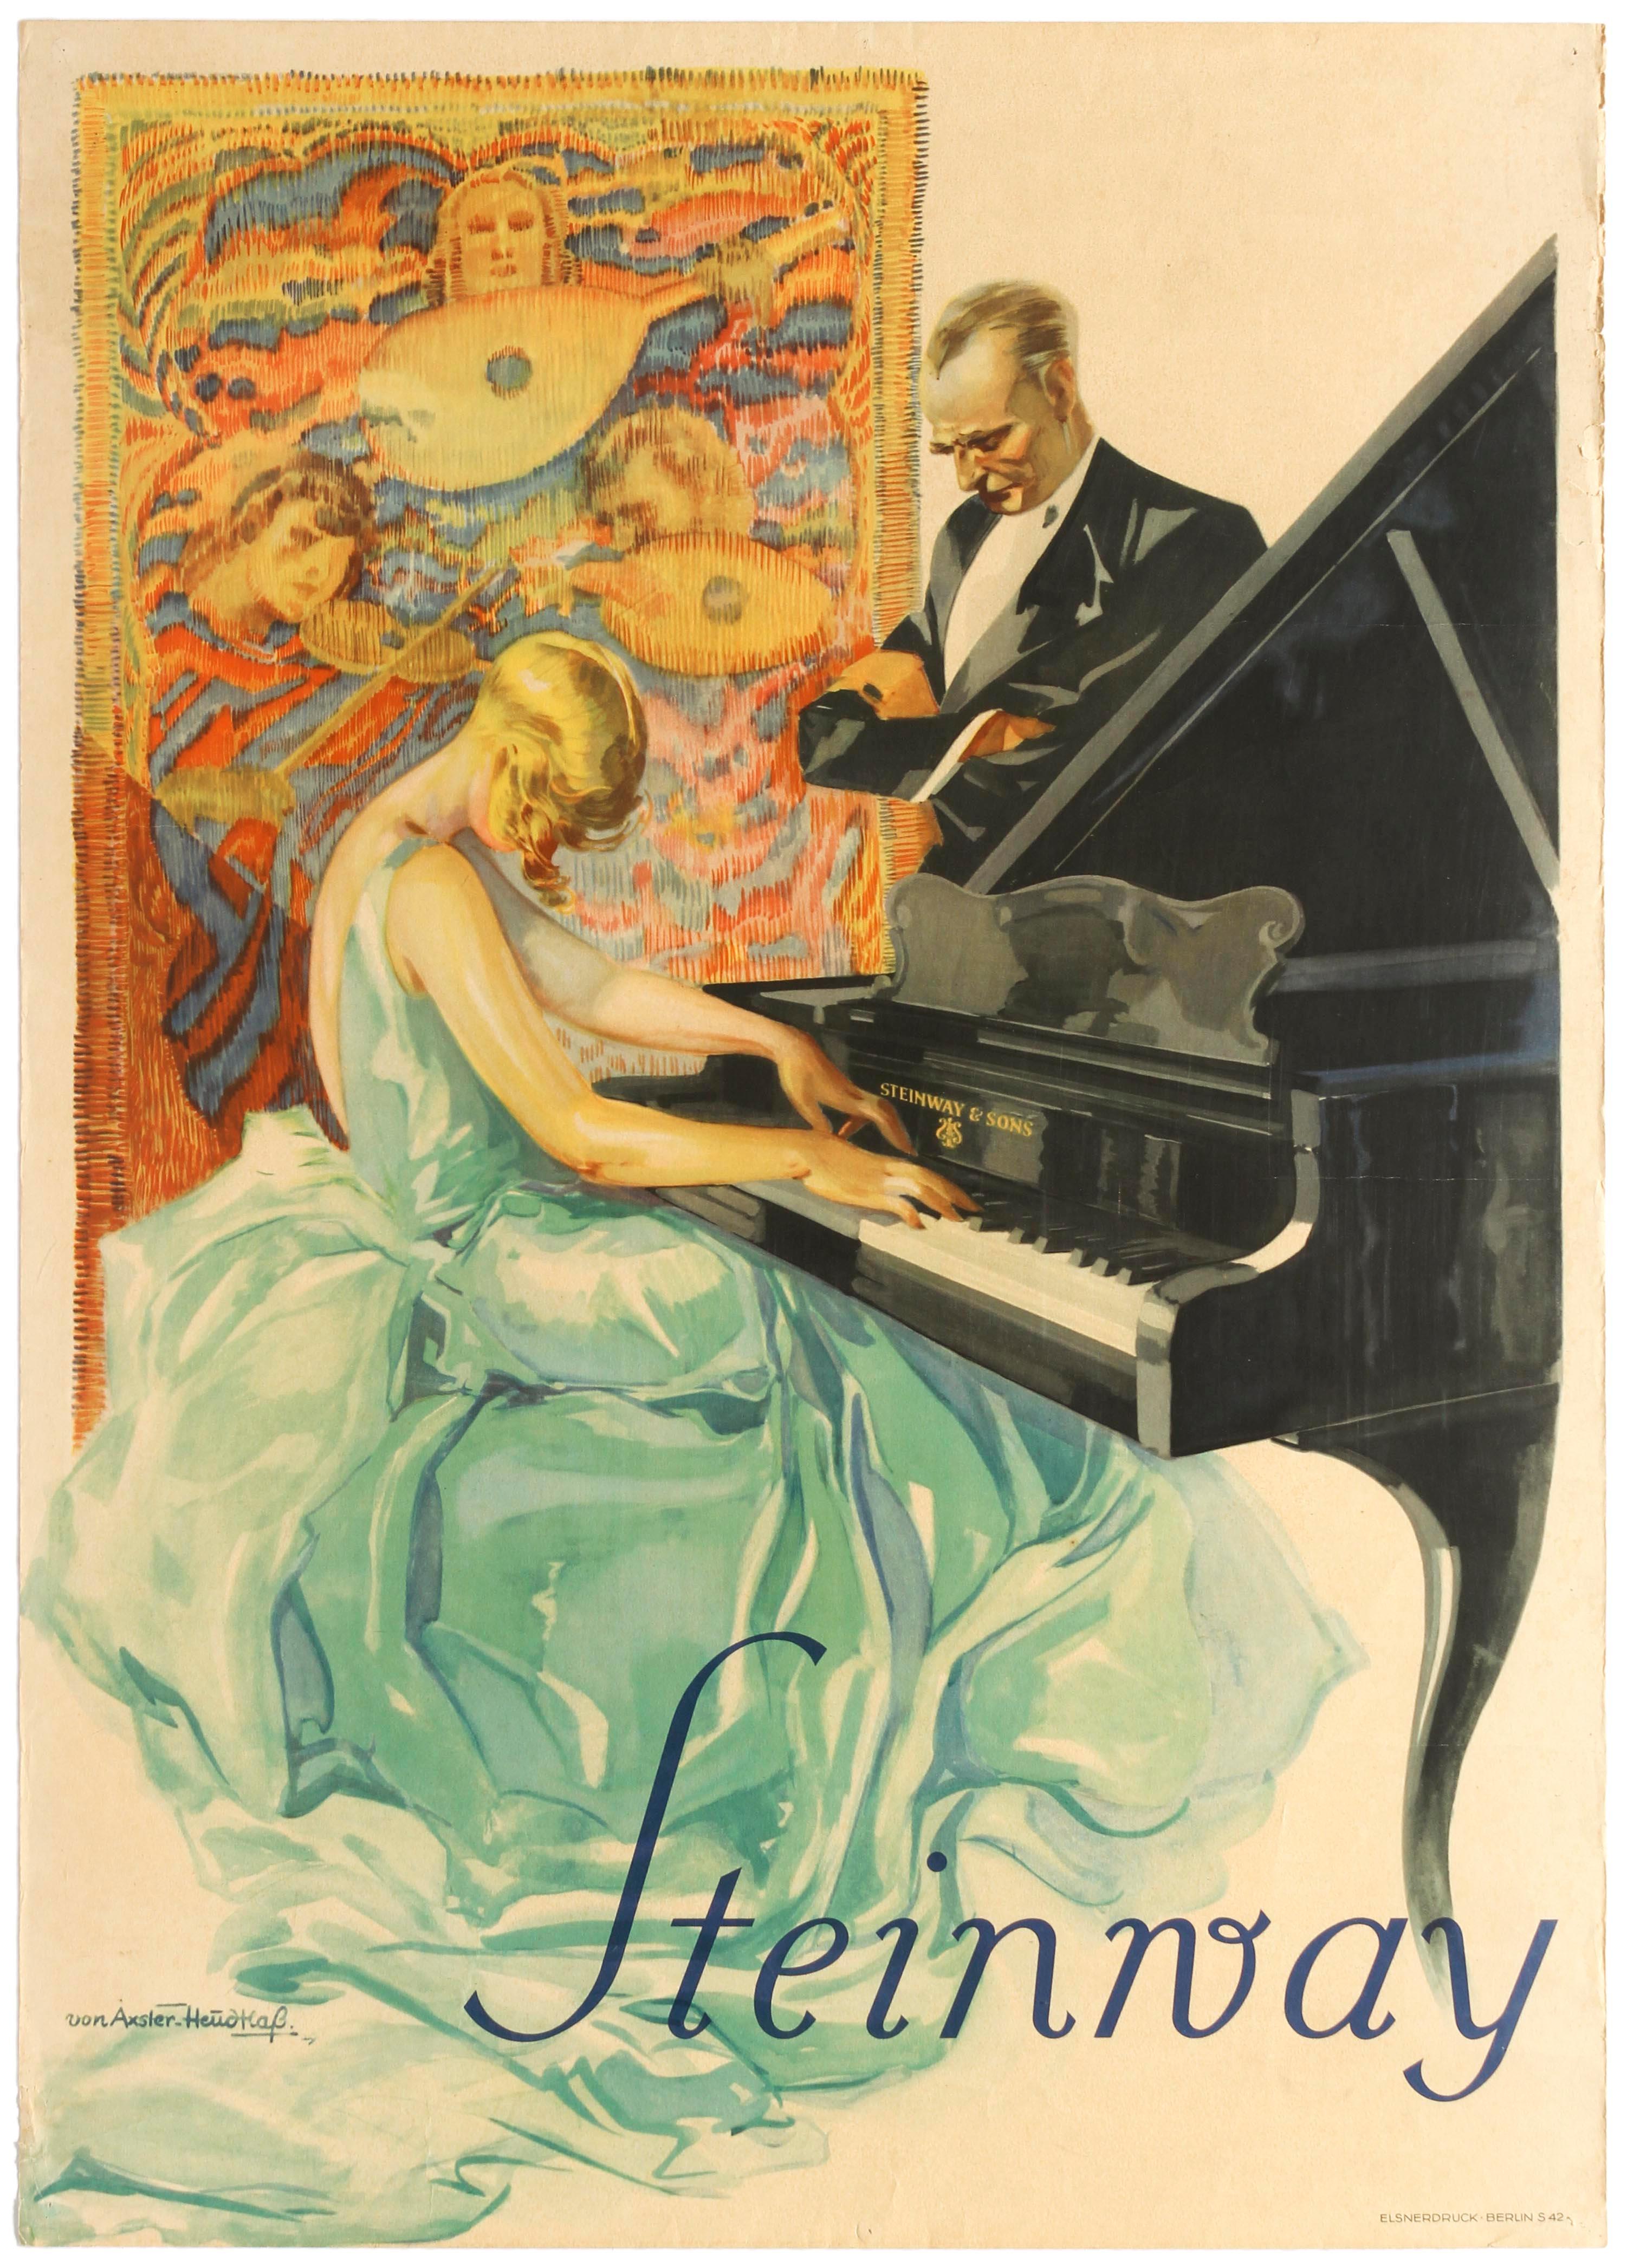 Werner Von Axster Heudtlass Print - Original Vintage Poster Steinway & Sons Piano Music Tapestry Pianist Art Design